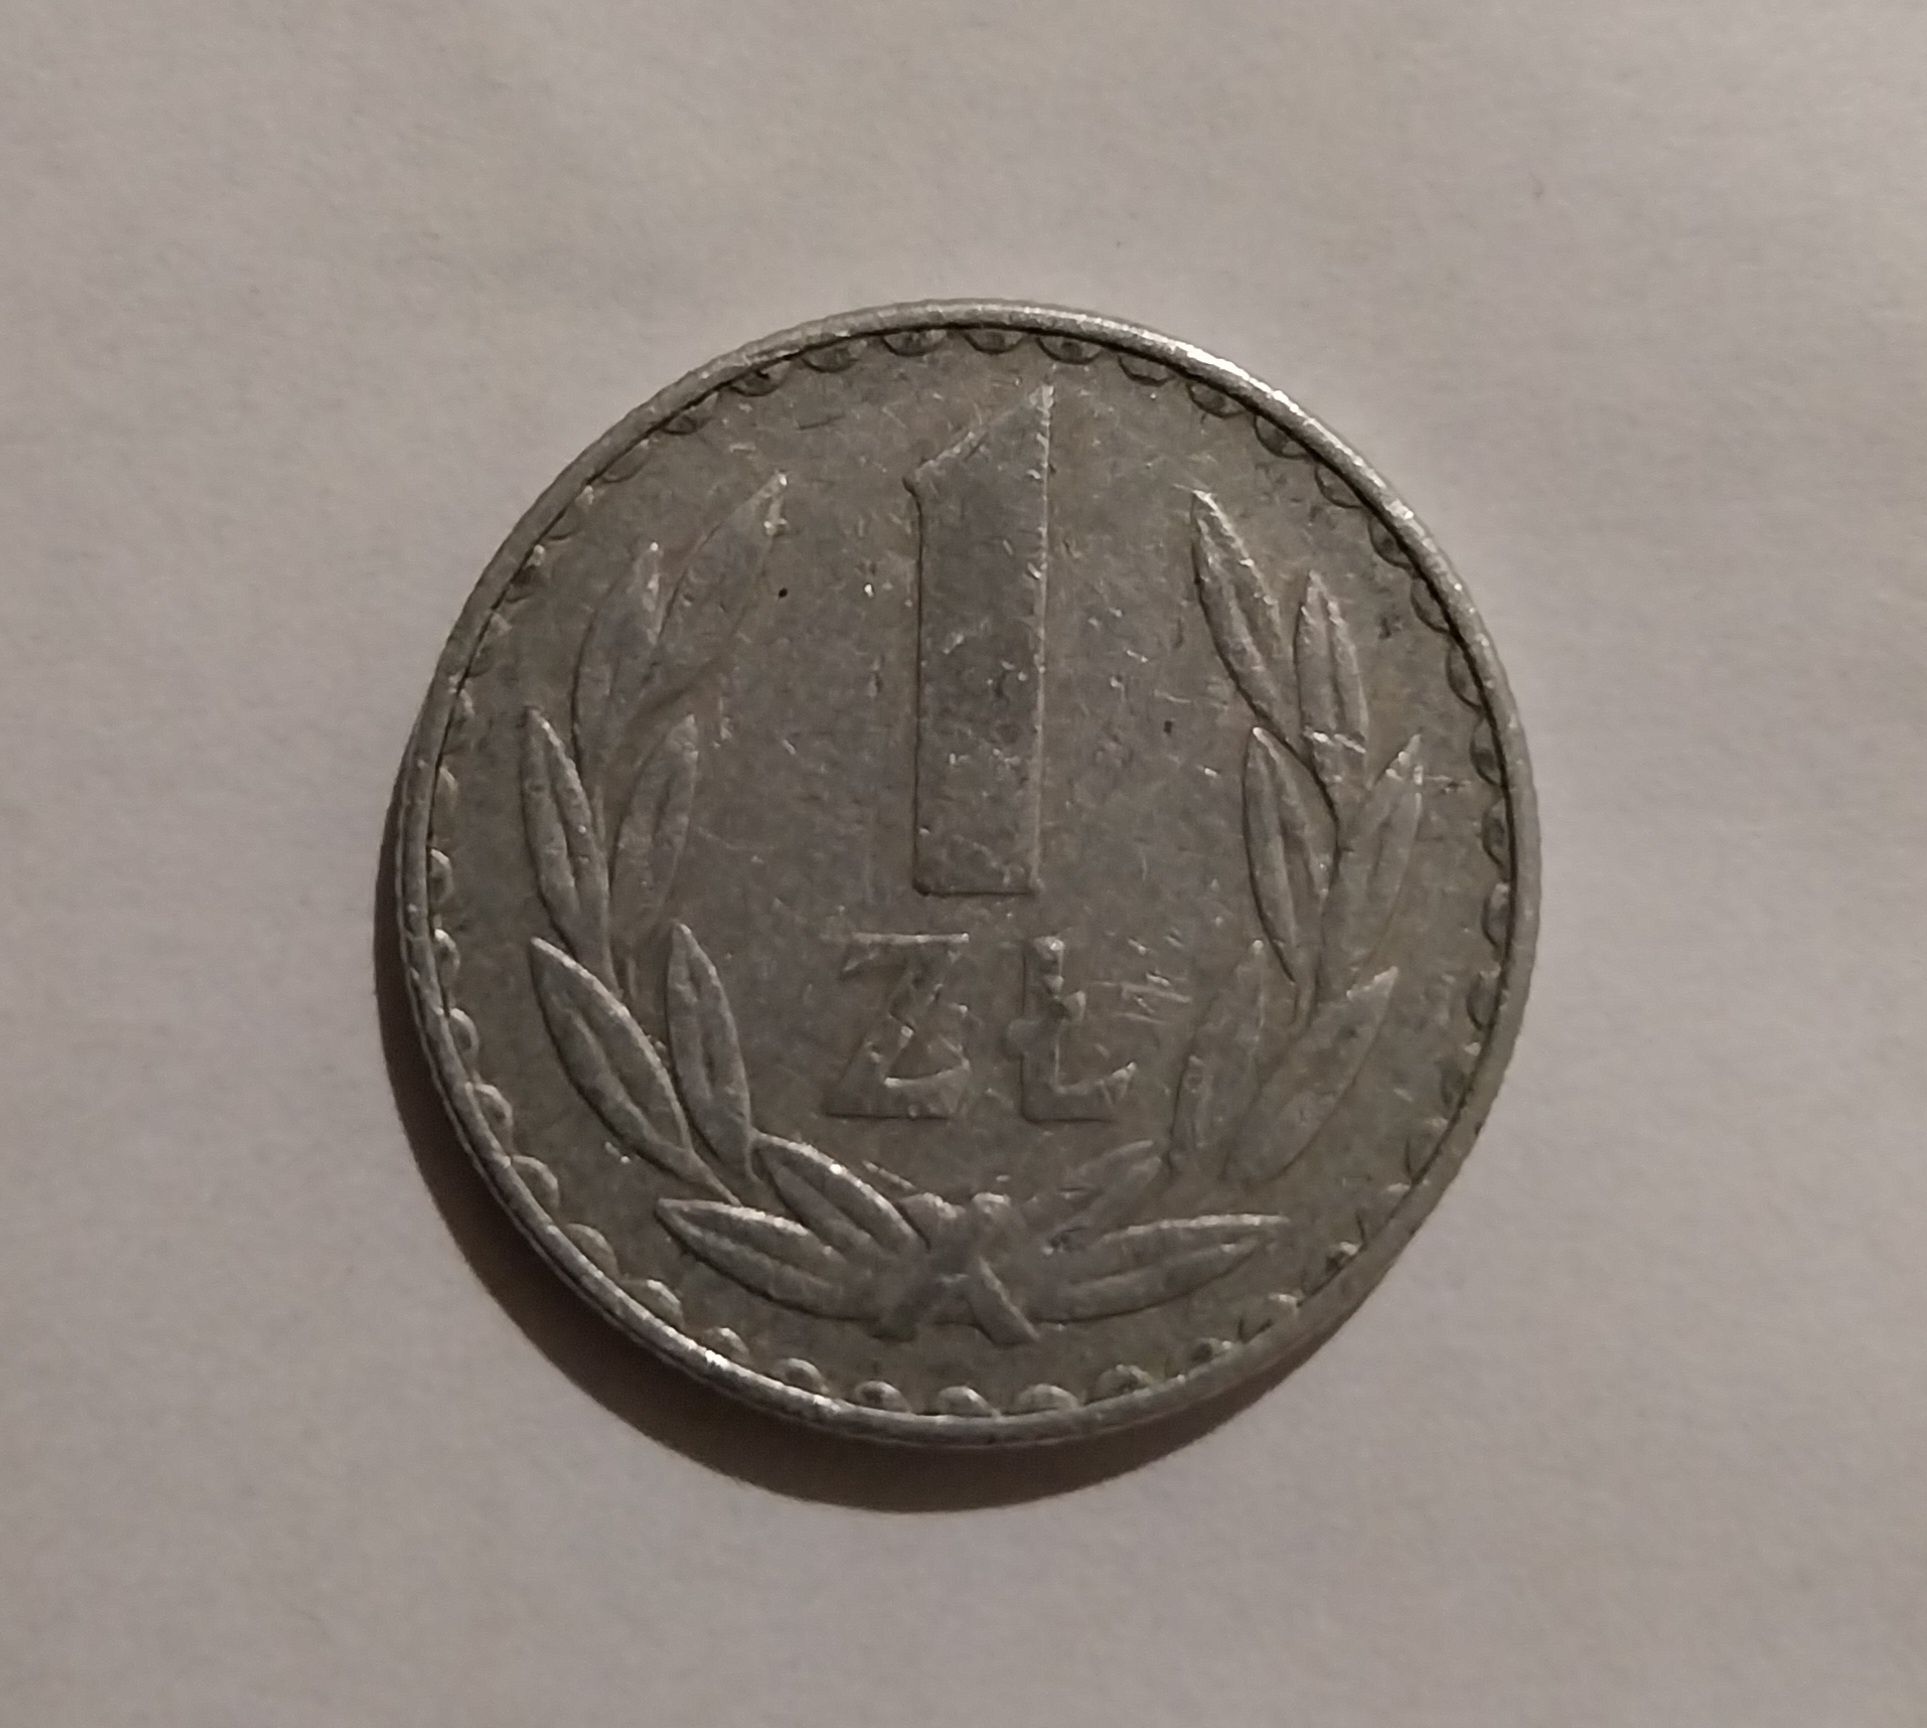 Moneta 1 zł rok 1978 zm